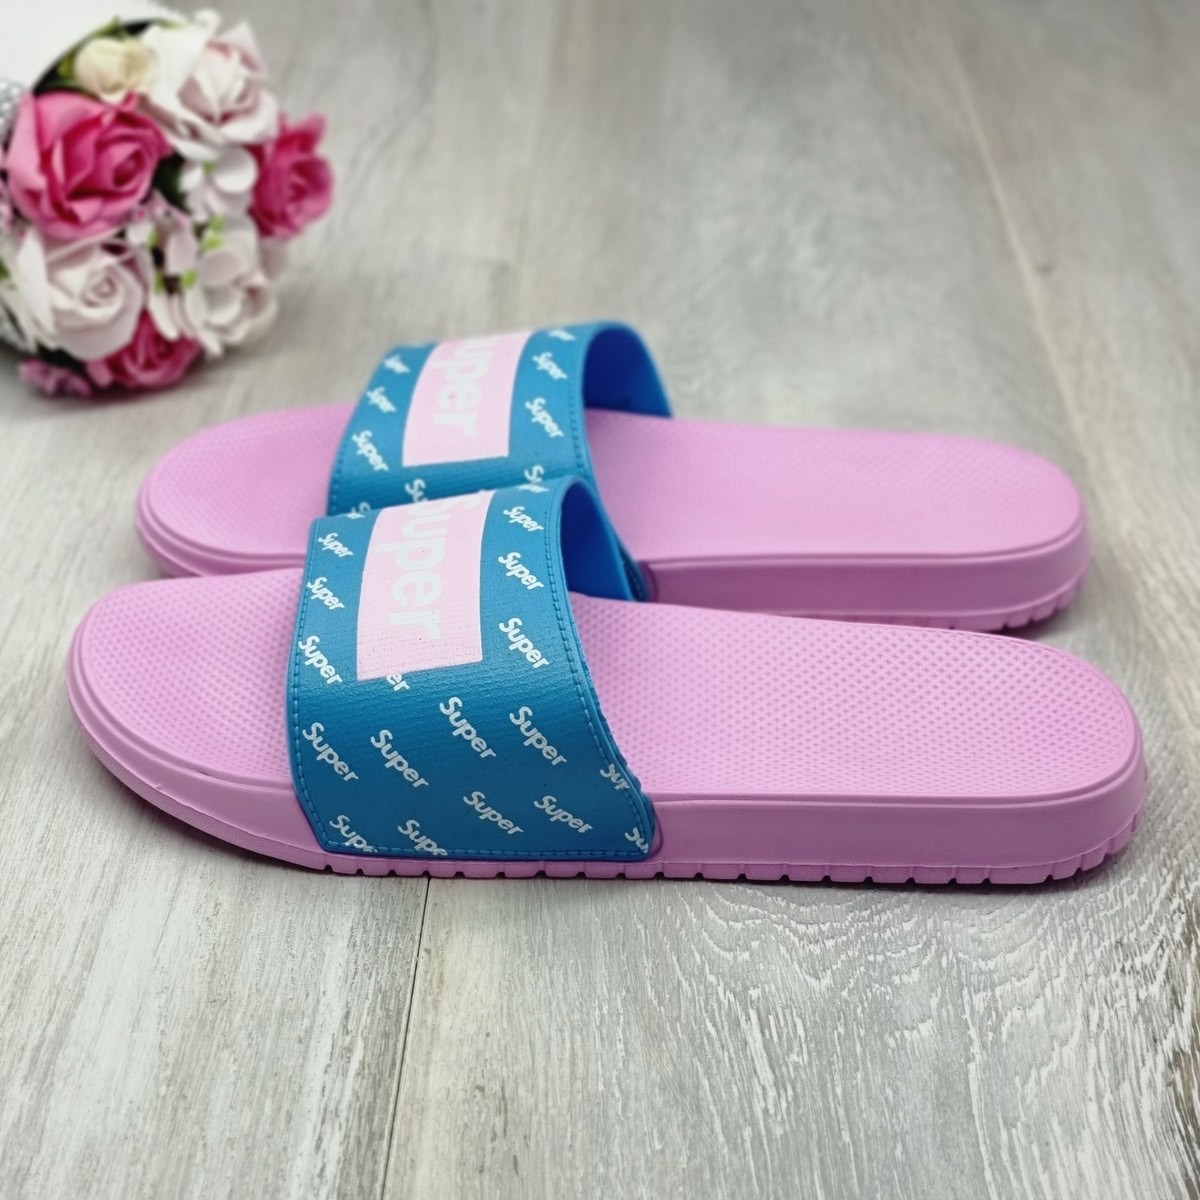 Papuci dama roz/bleu talleen